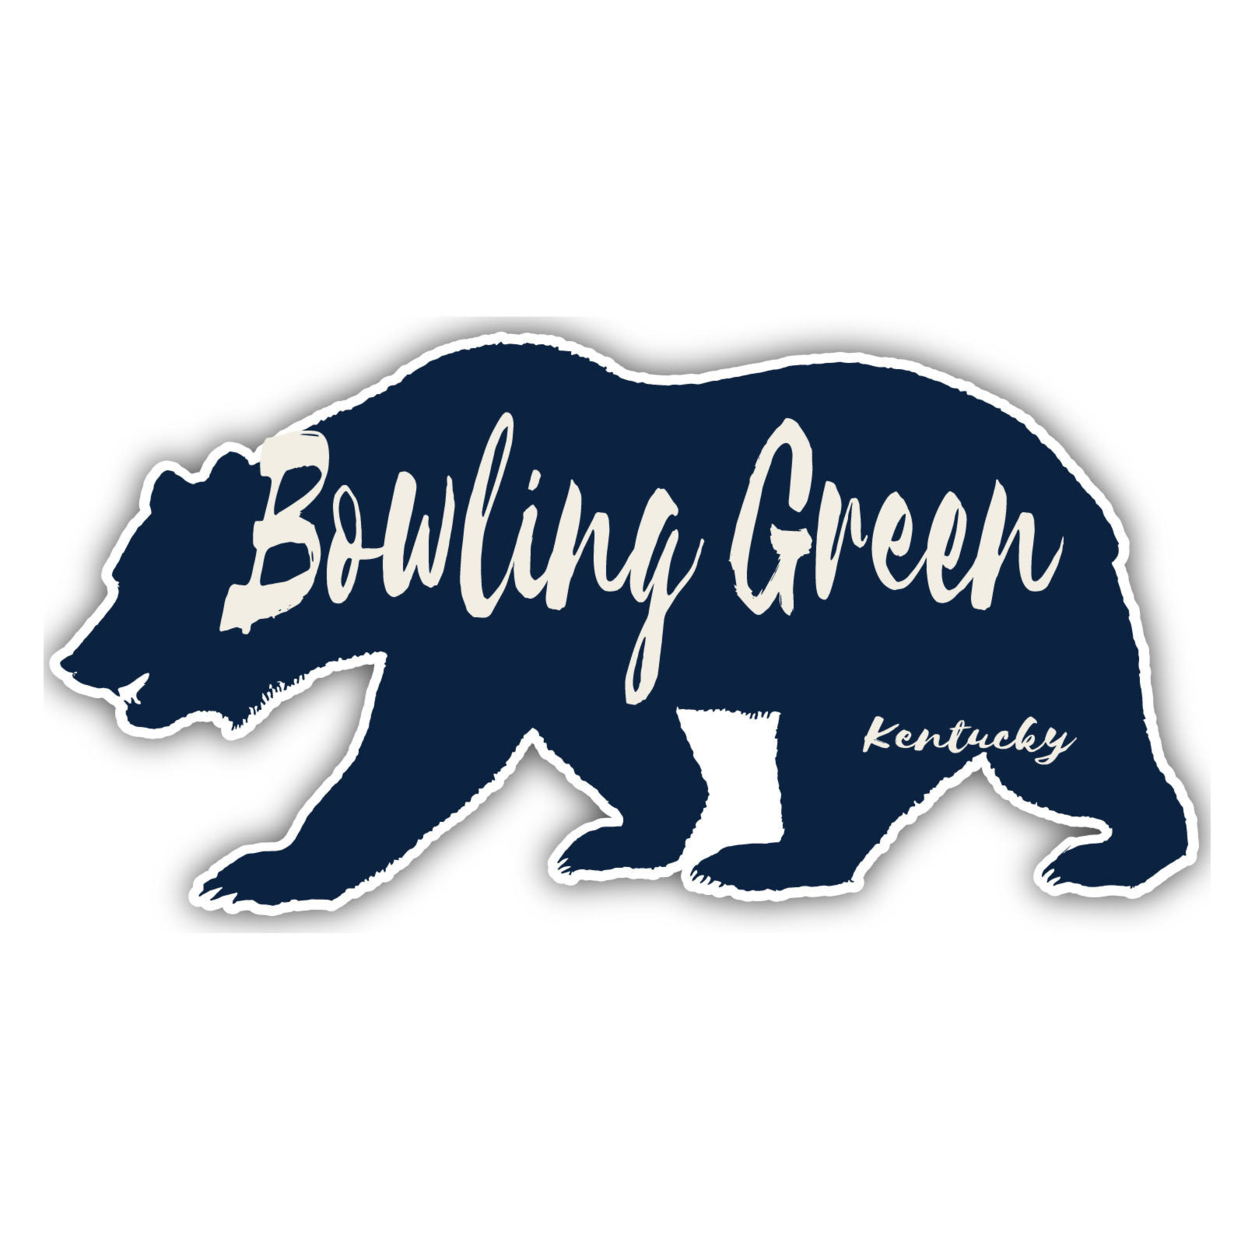 Bowling Green Kentucky Souvenir Decorative Stickers (Choose Theme And Size) - Single Unit, 8-Inch, Bear